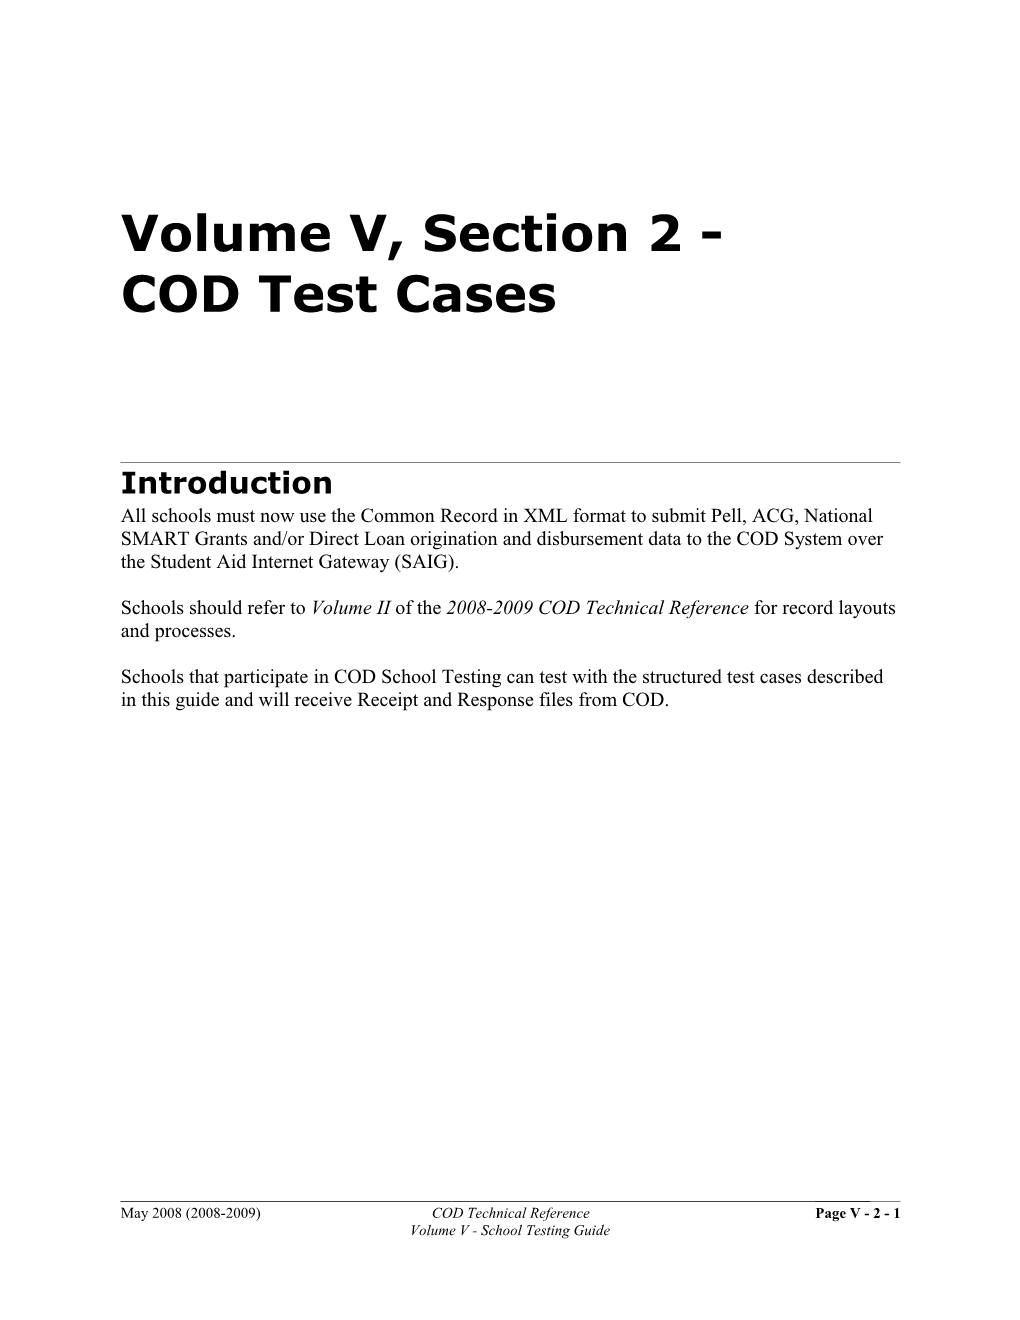 Volume V, Section 2 - COD Test Cases